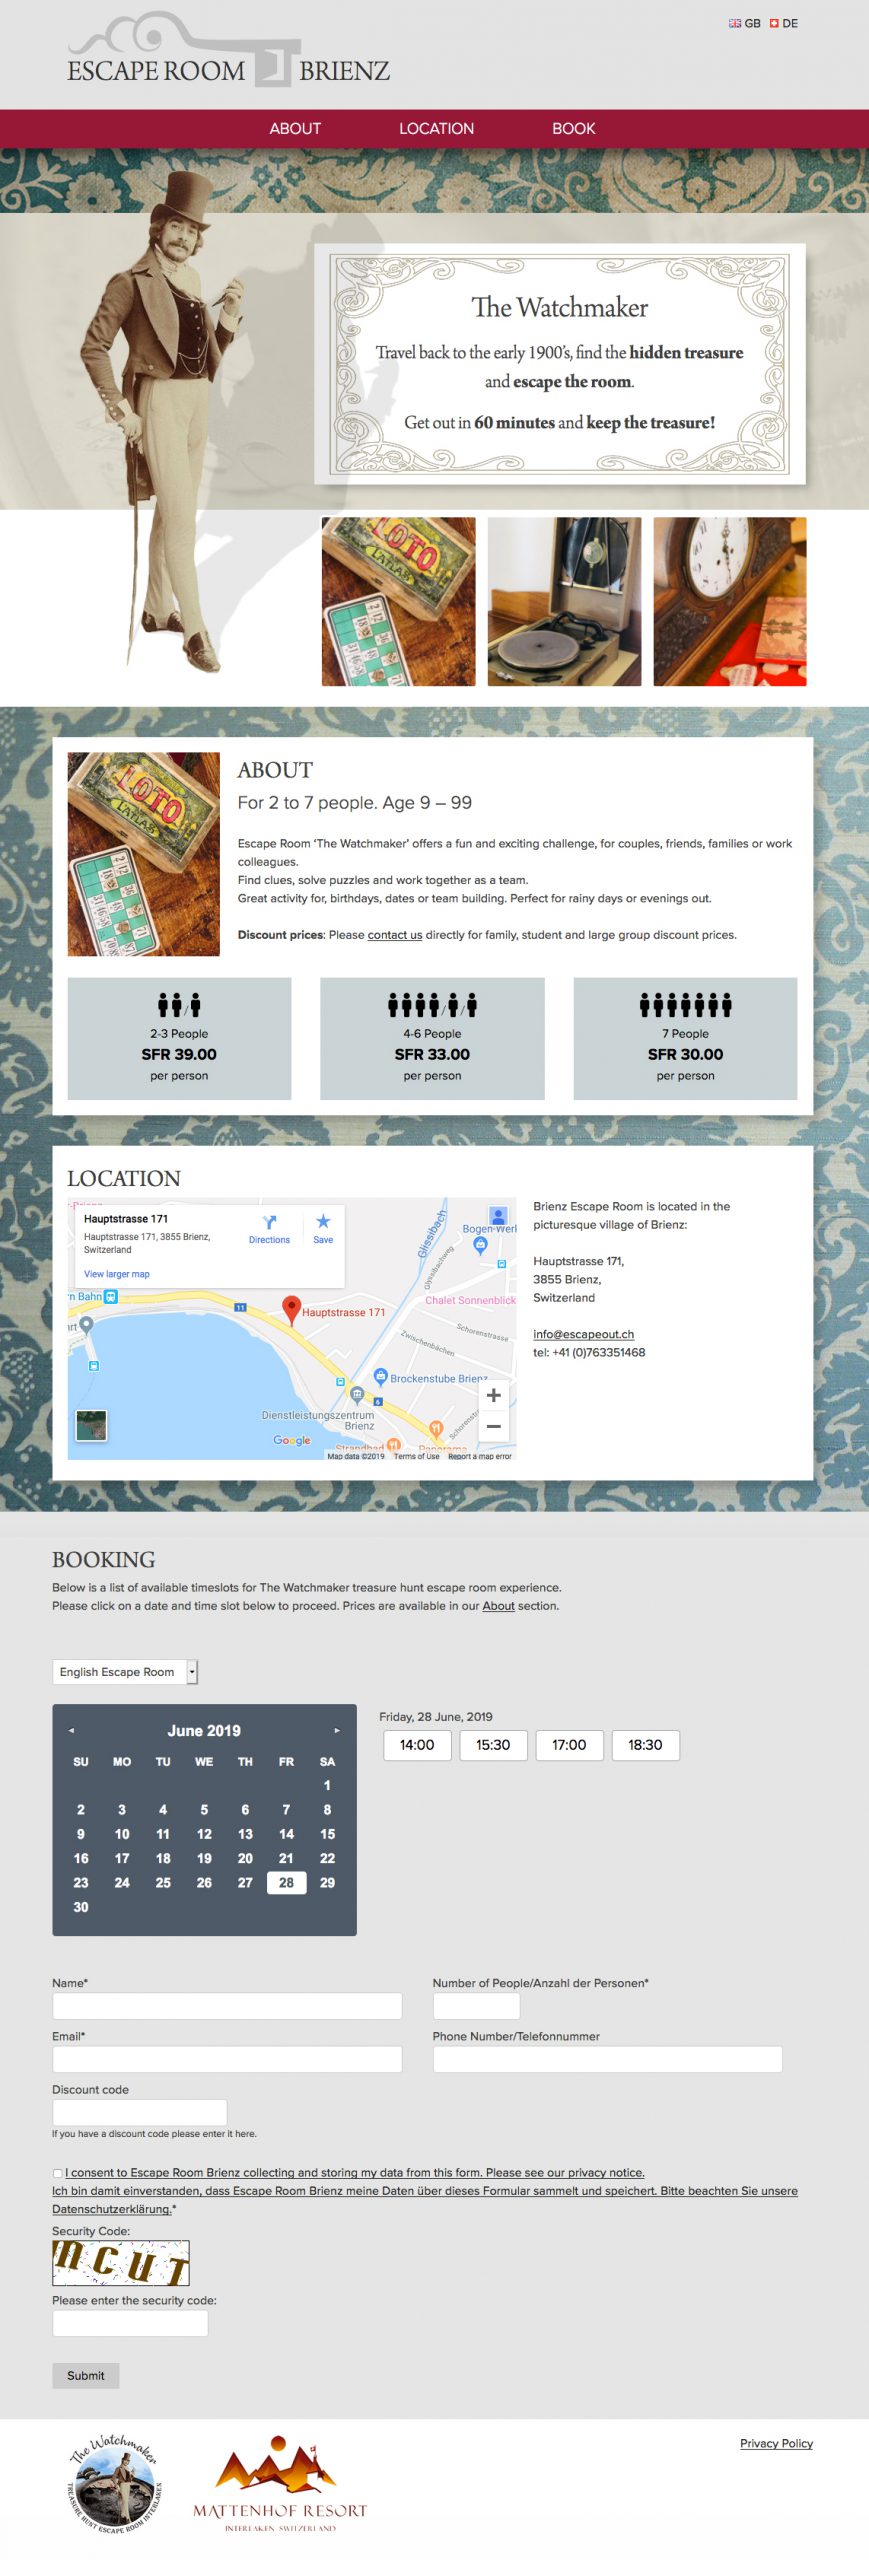 Escape room website screenshot